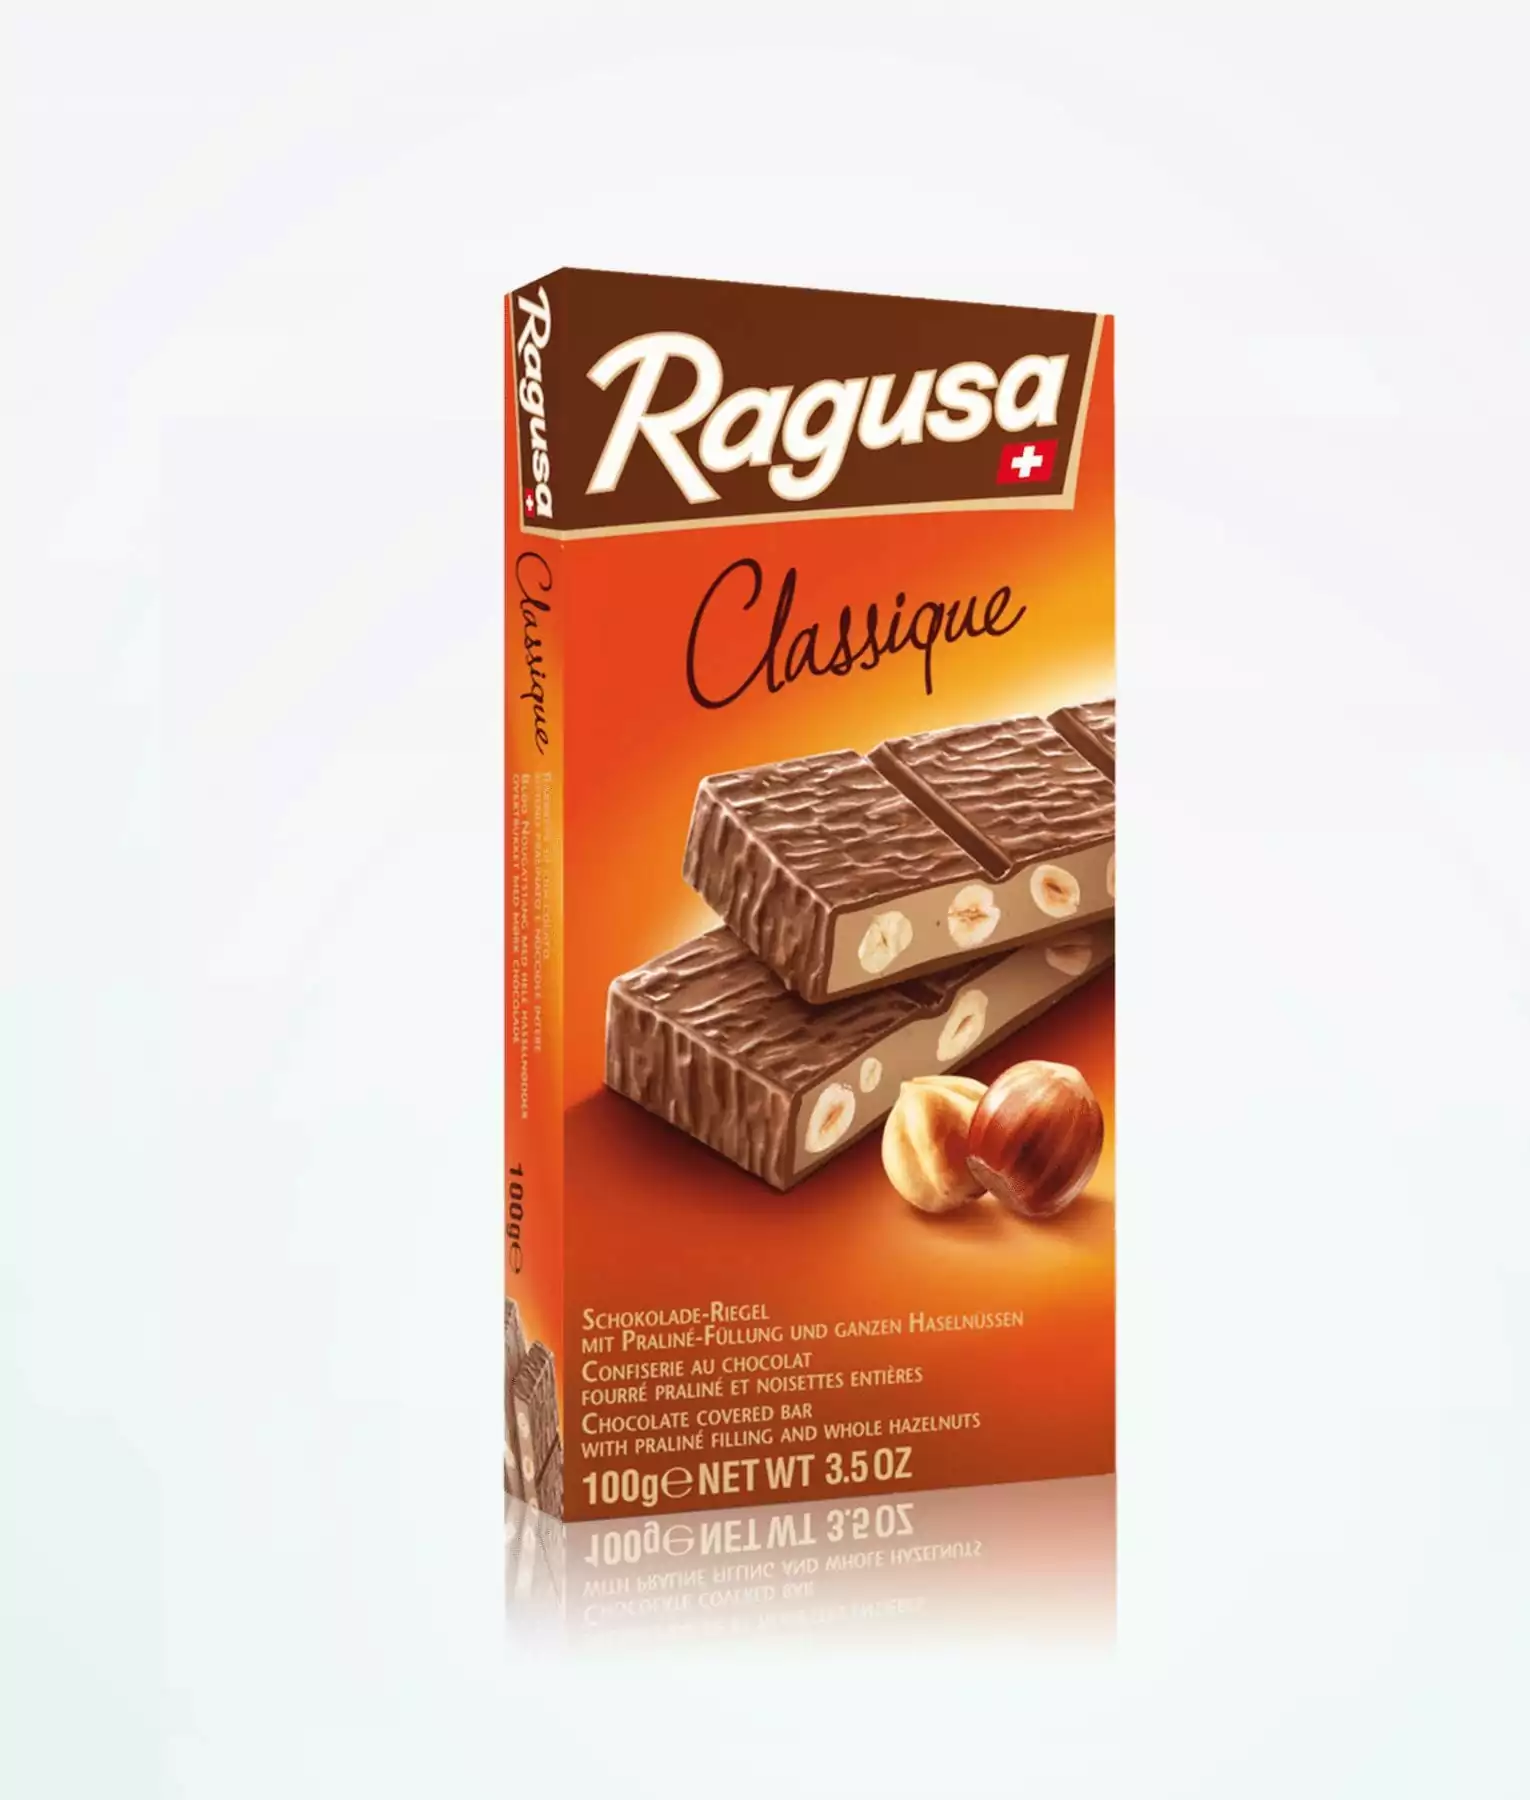 Ragusa Camille Bloch chocolat classique 100g